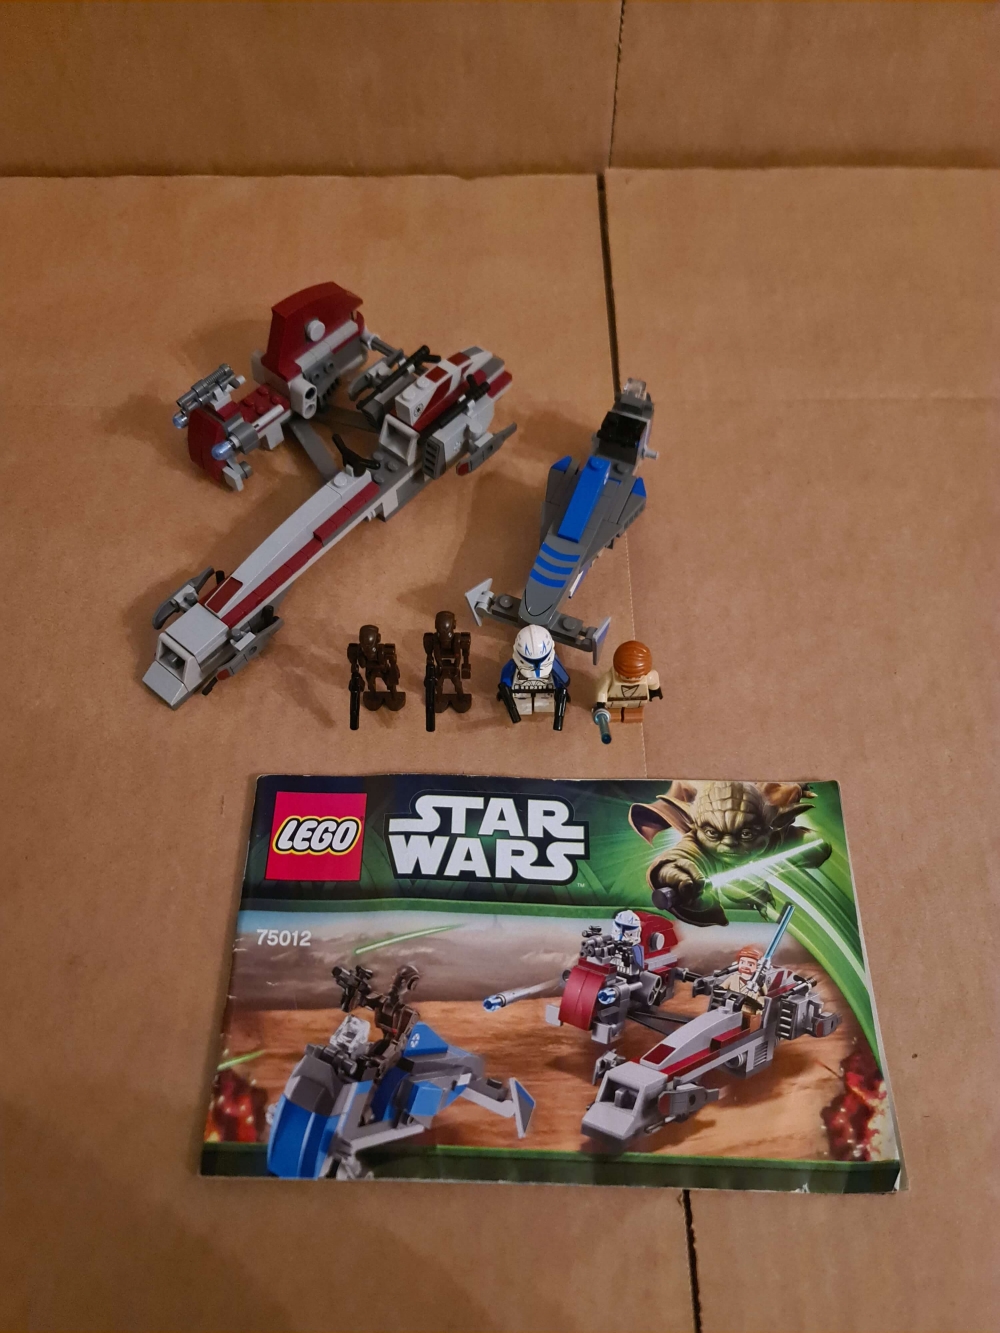 Sett 75012 fra Lego Star Wars  : The Clone Wars serien.

Meget pent. Komplett med manual. Alle klistremerker på og fine.
Nydelige figurer.

